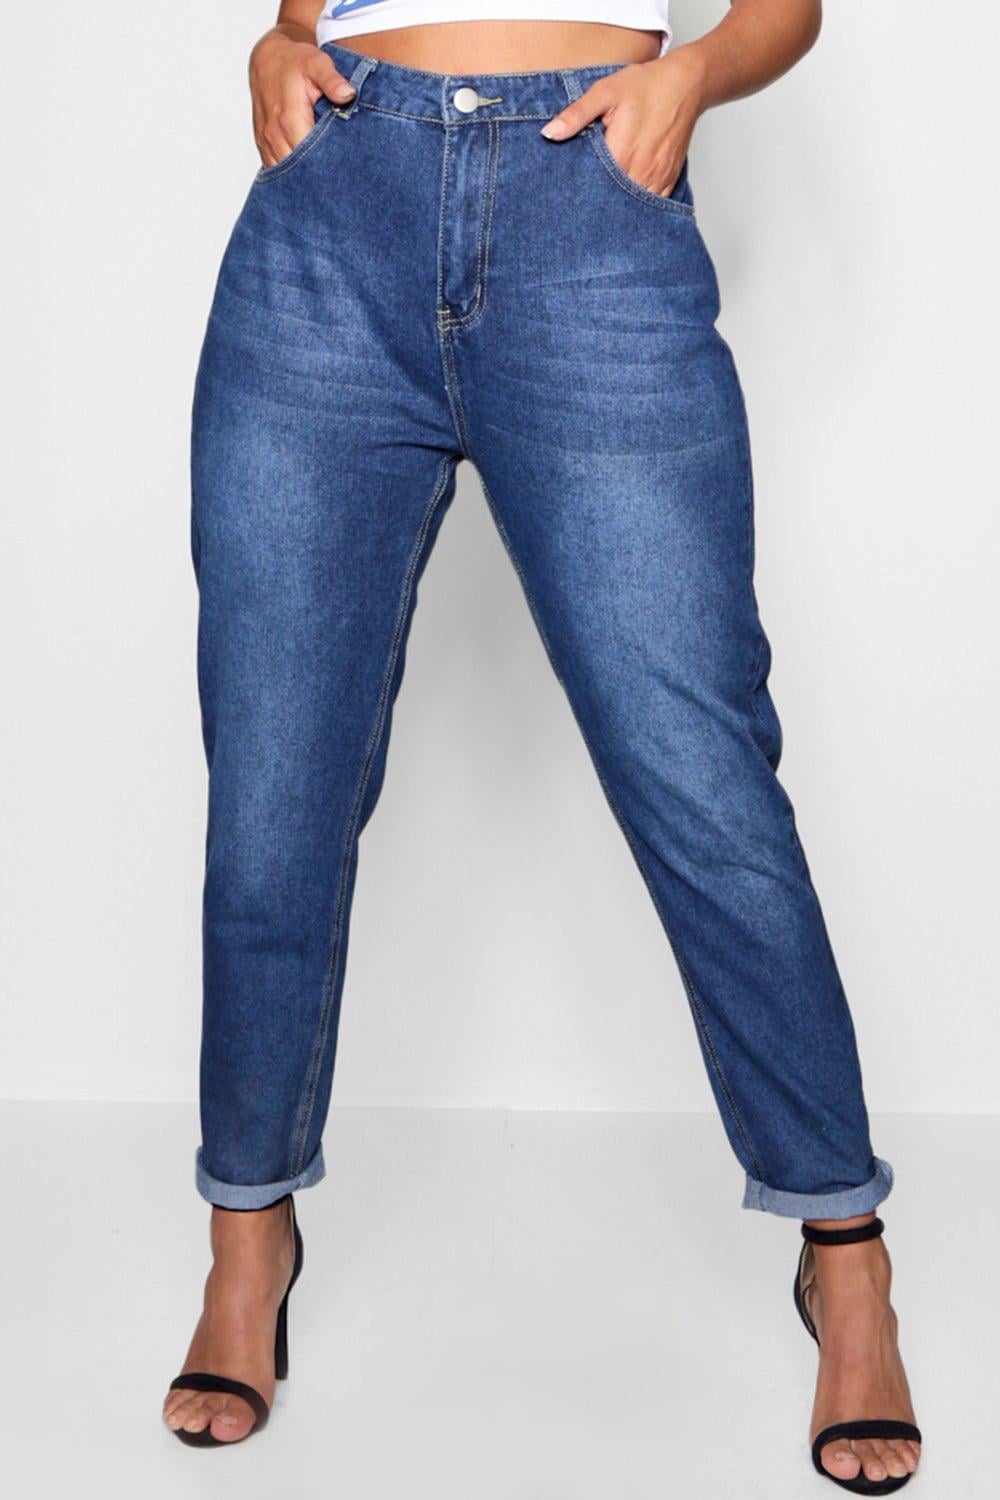 best jeans cut for curvy figure